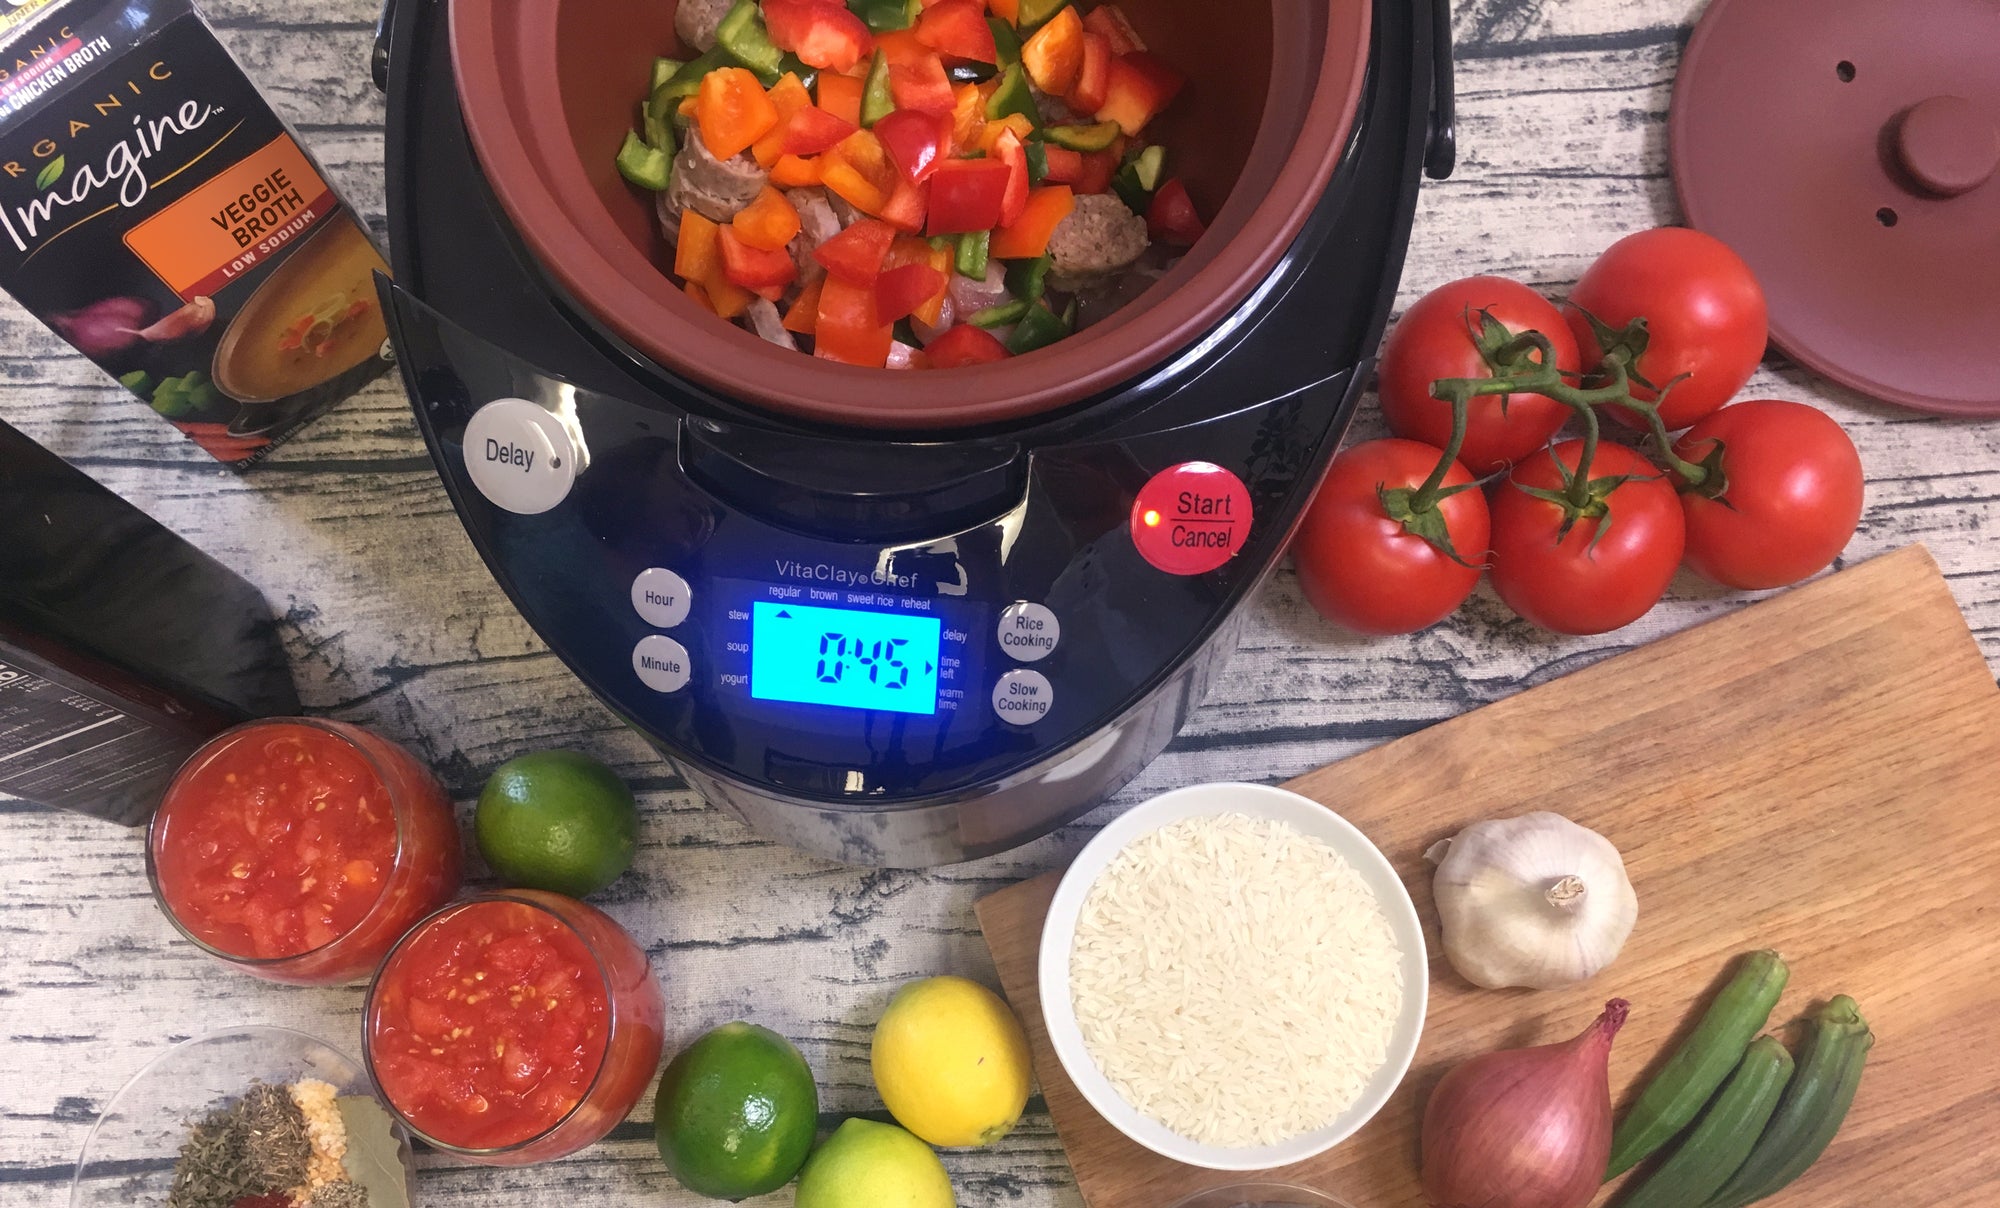 Vita Clay Digital Express Cooker for Vegan Vegetarian, the Ultimate Universal 5 Minutes Flavor Machine